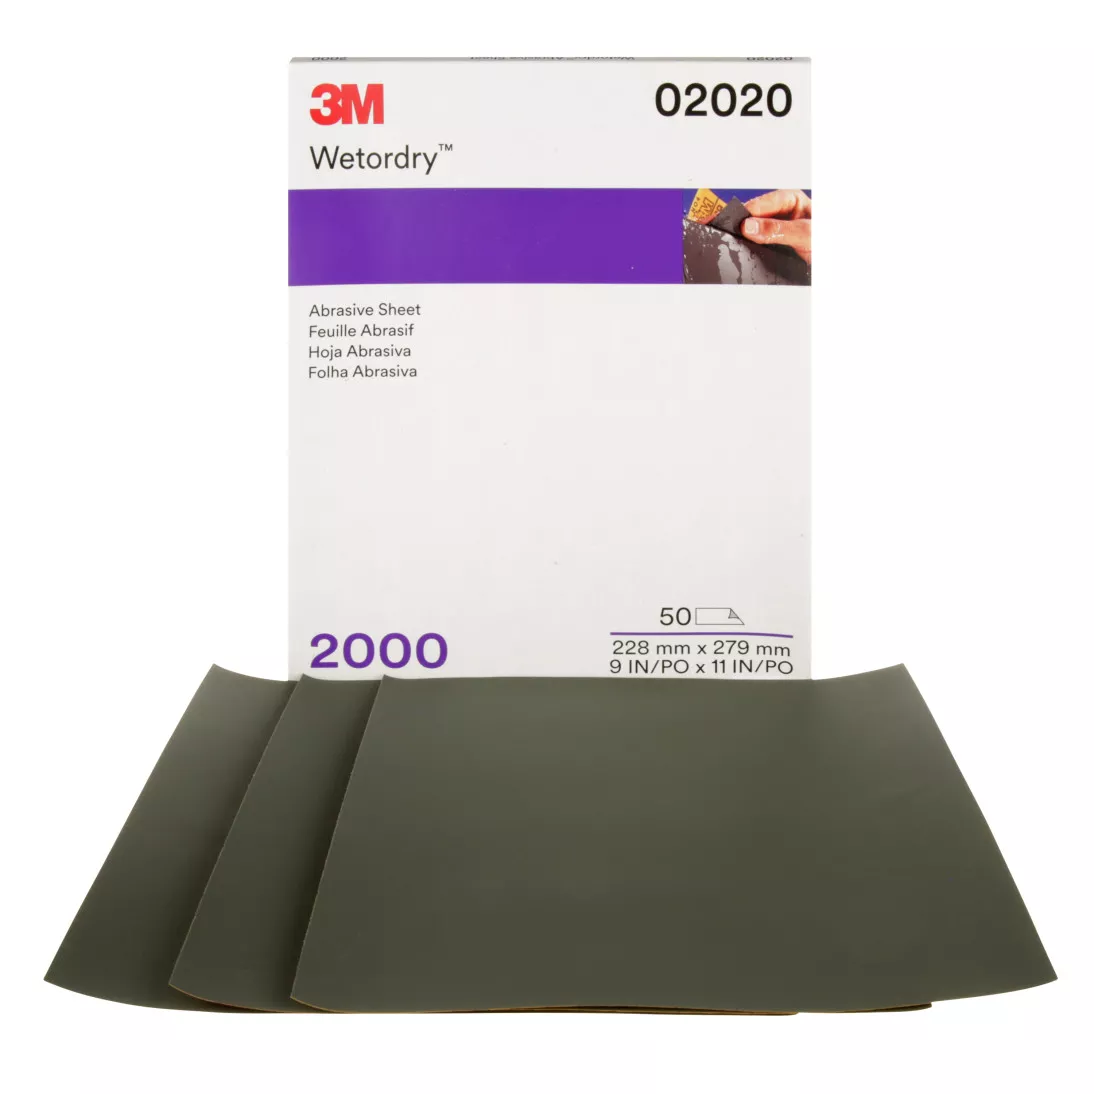 3M™ Wetordry™ Abrasive Sheet, 02020, 2000, 9 in x 11 in, 50 sheets per
carton, 5 cartons per case